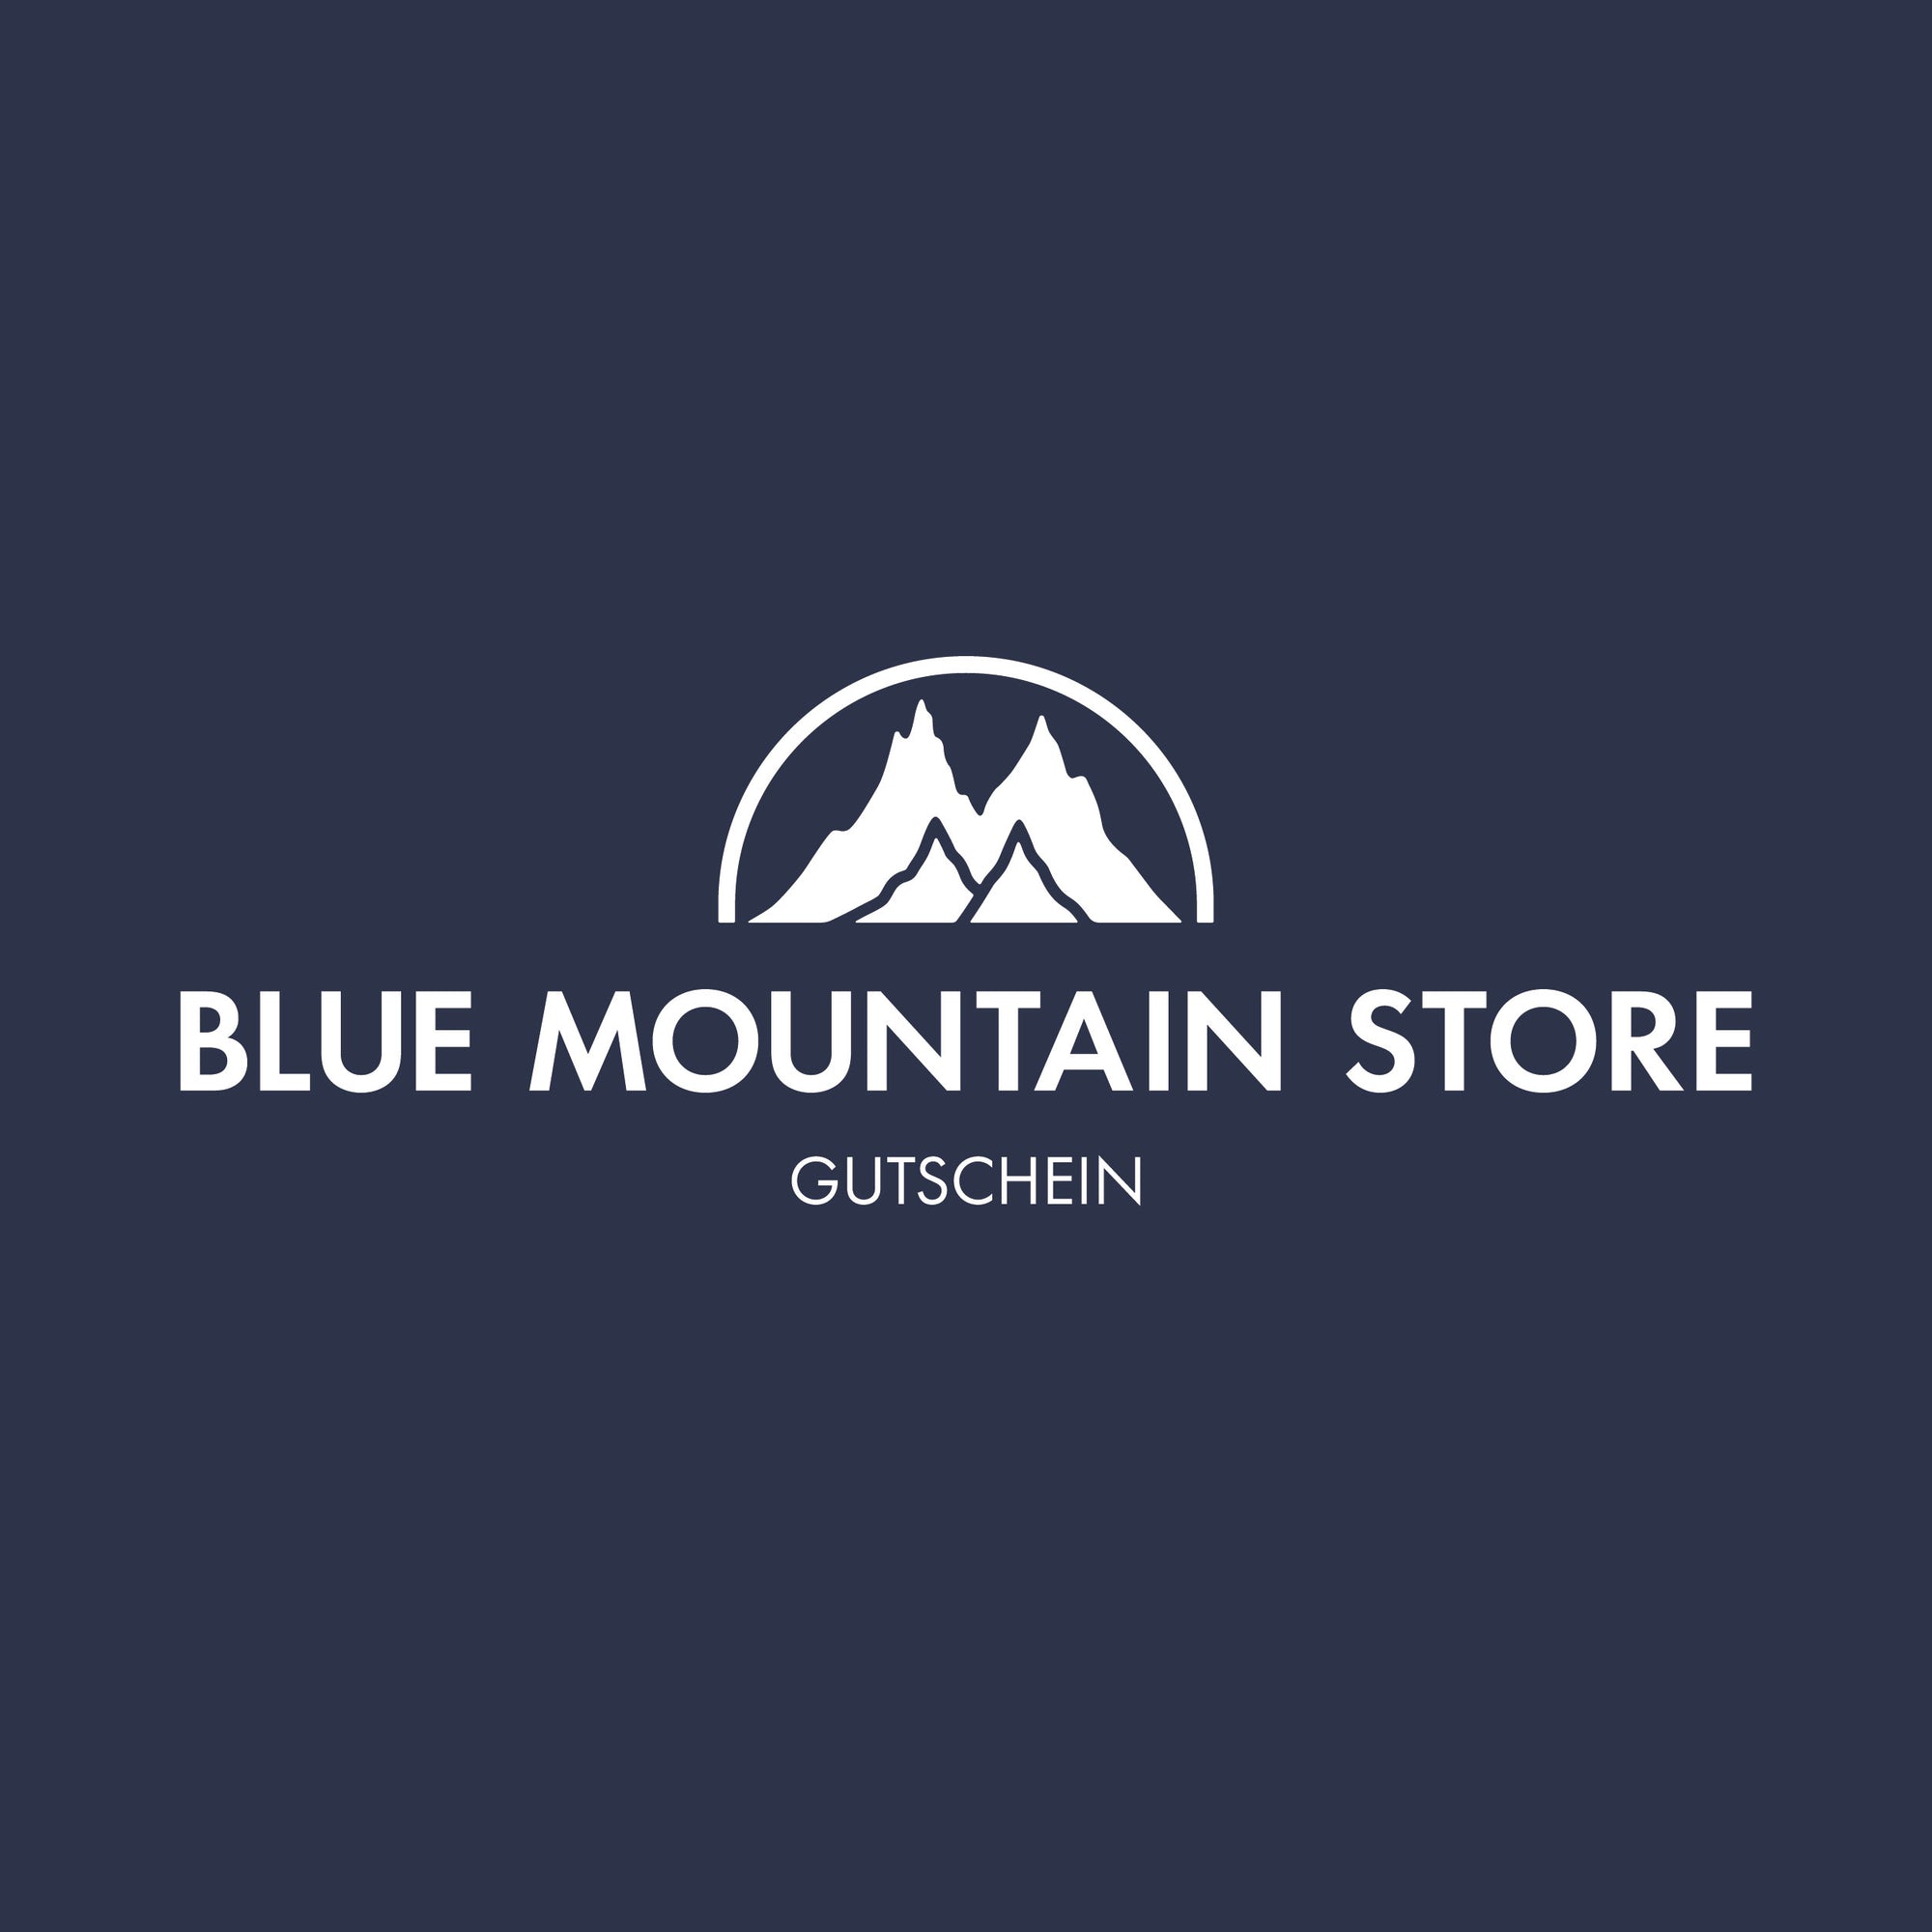 Gutschein Blue Mountain Store - Blue Mountain Store